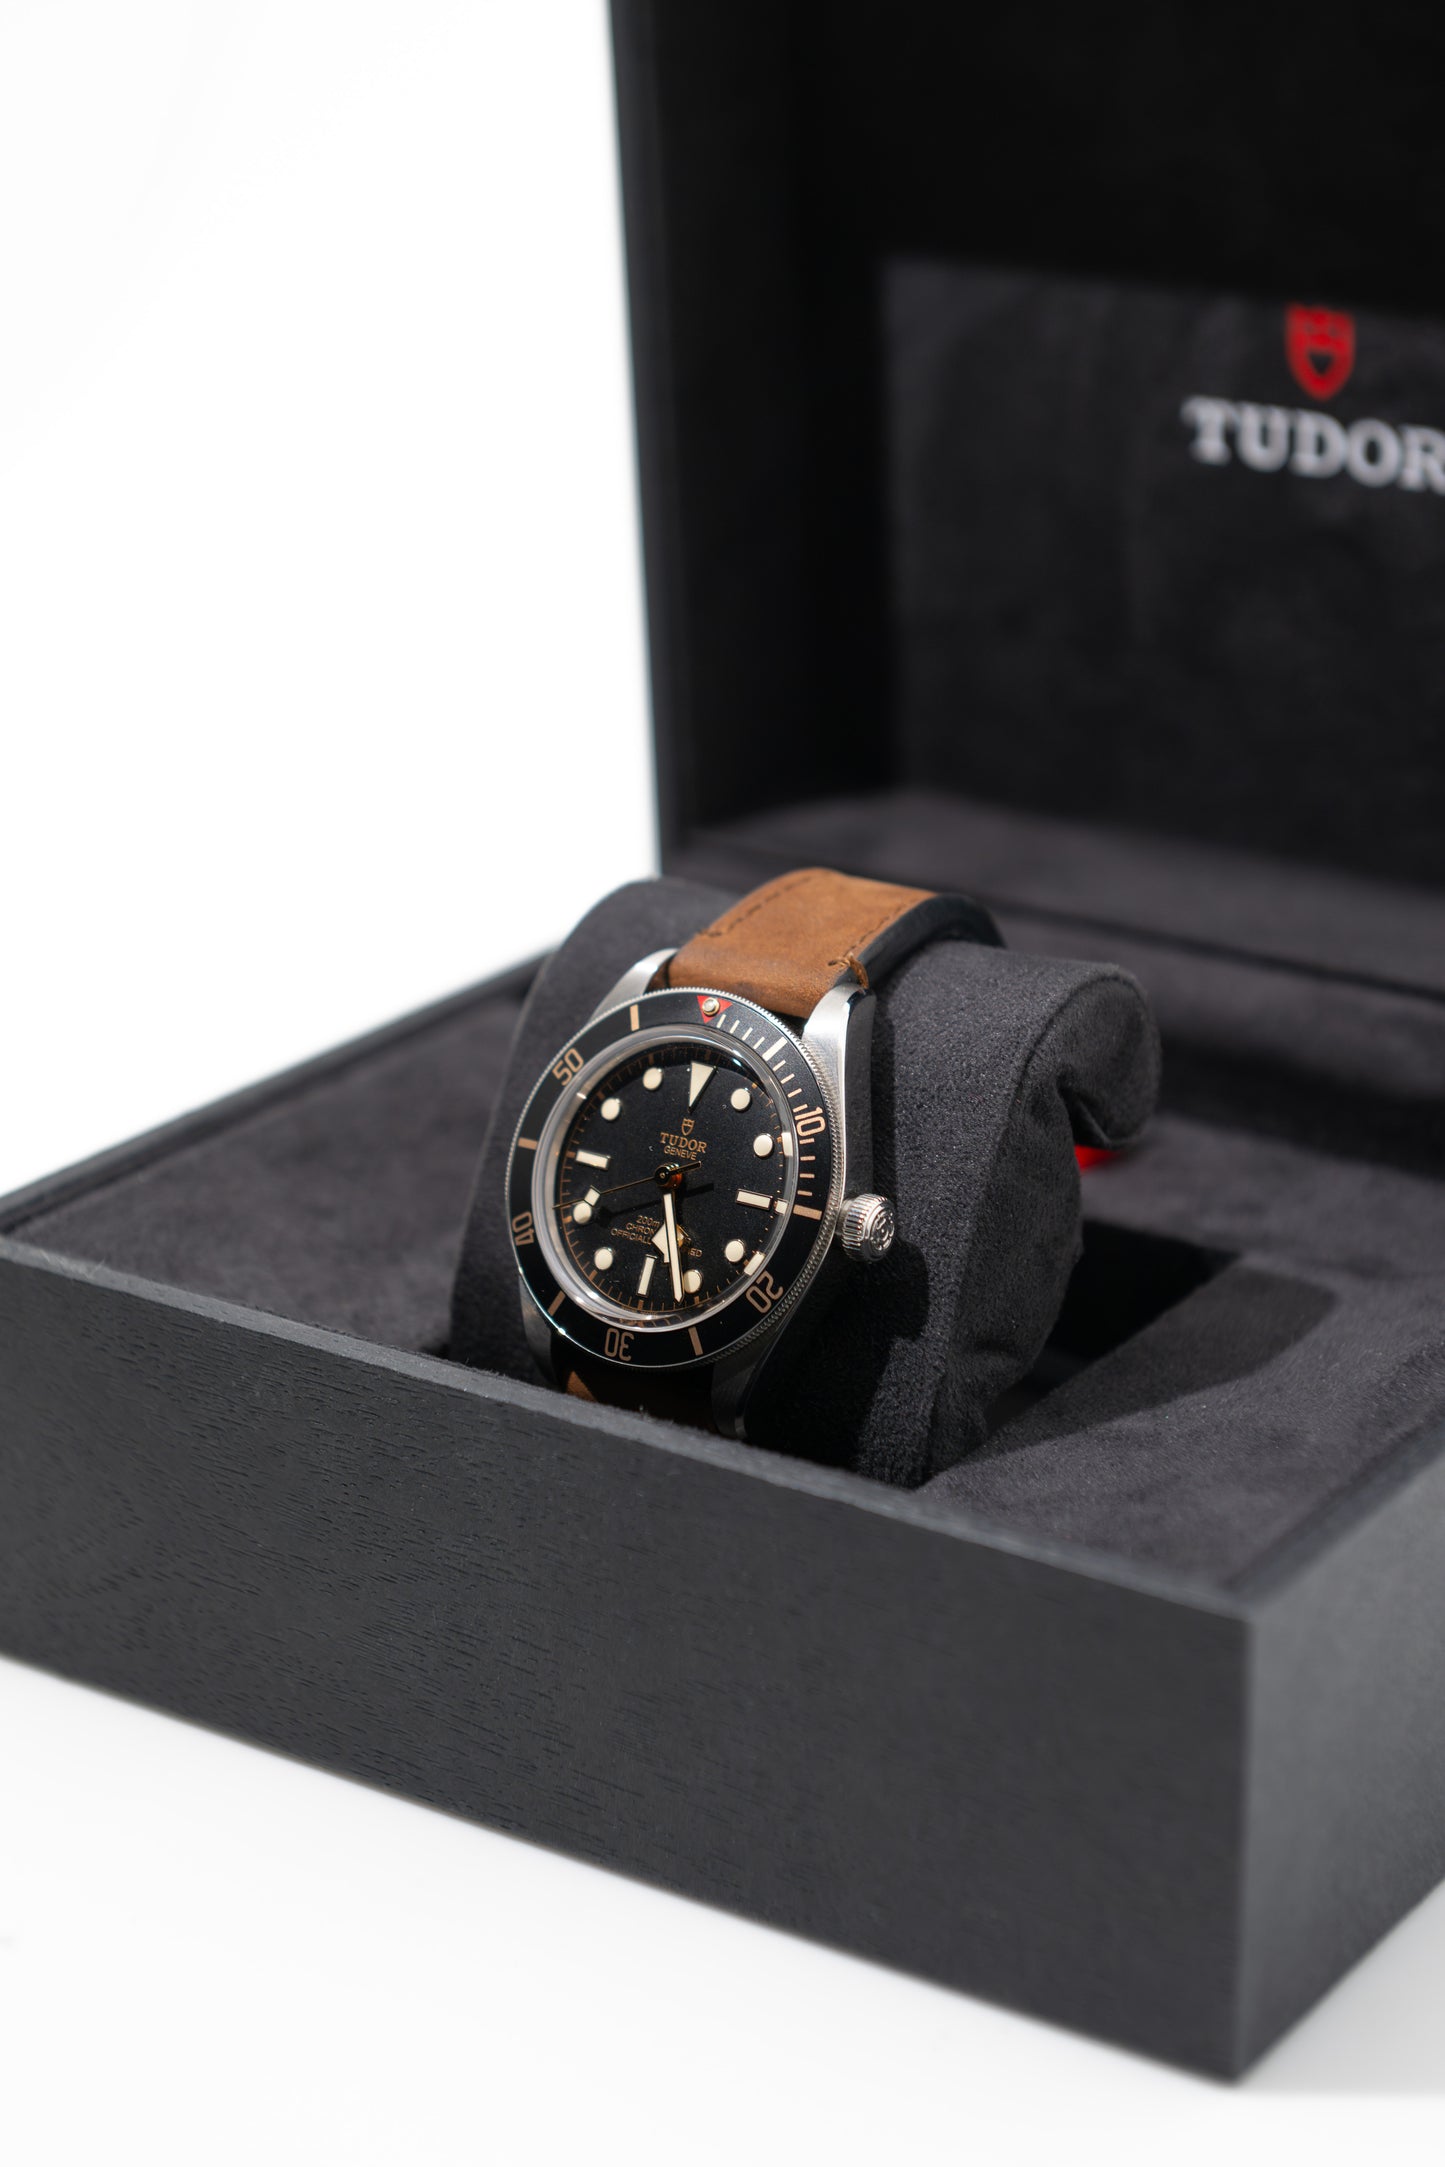 Tudor 79030N